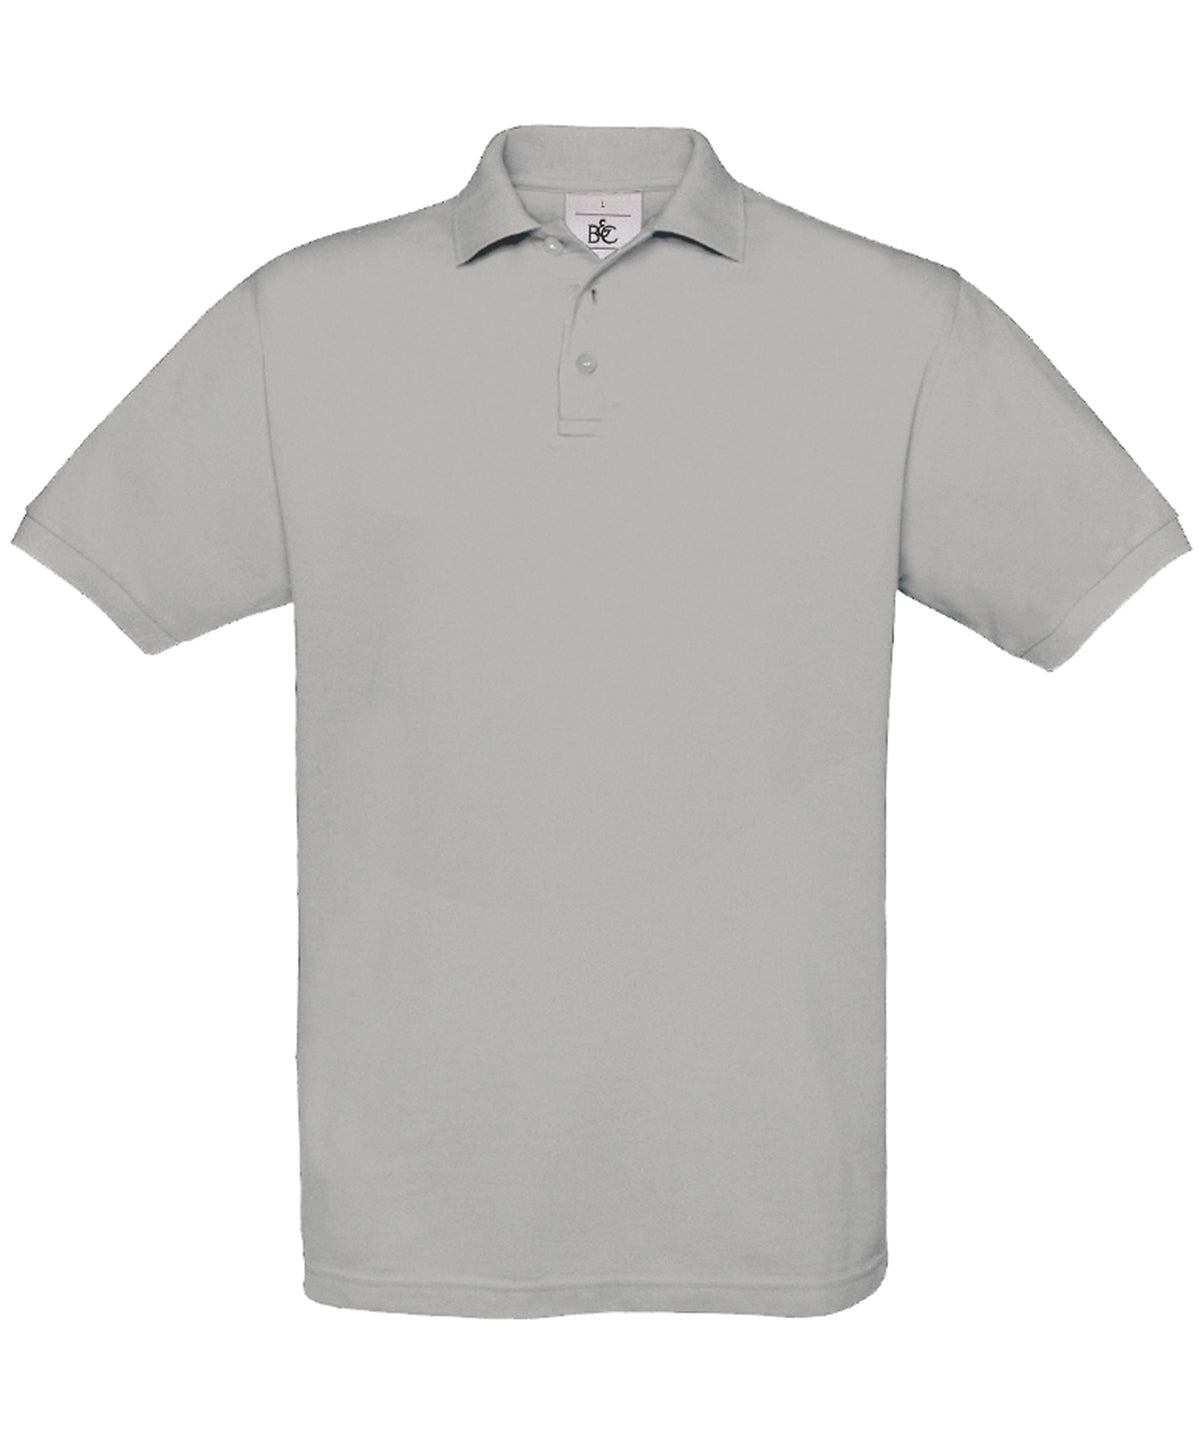 Personalised Polo Shirts - Dark Grey B&C Collection B&C Safran